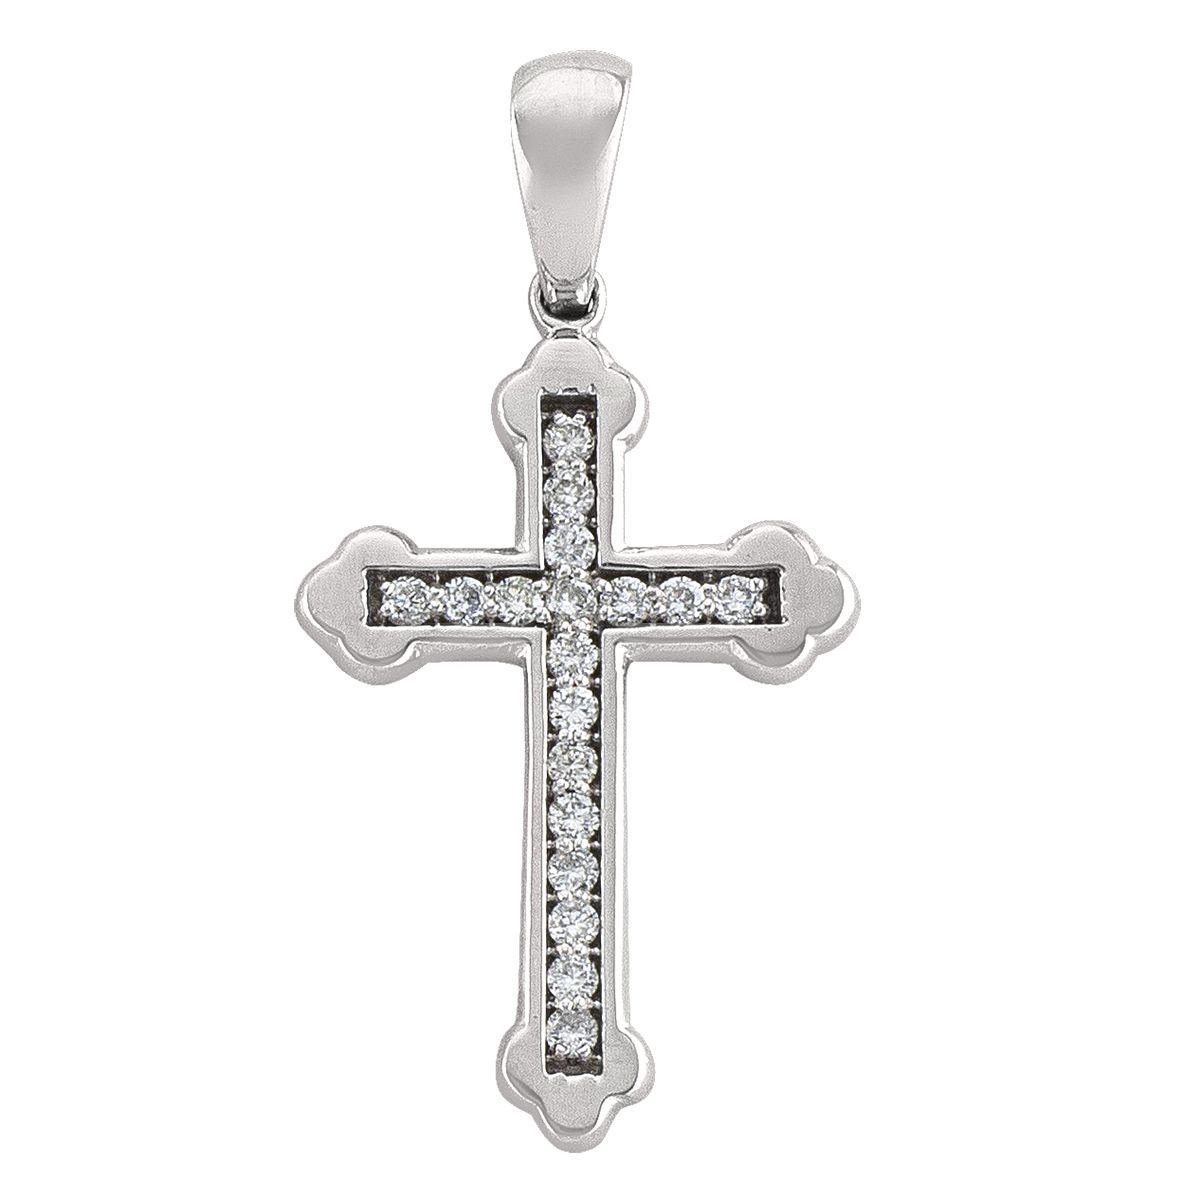 XD0706, Gold Cross, Diamond Cross, Orthodox